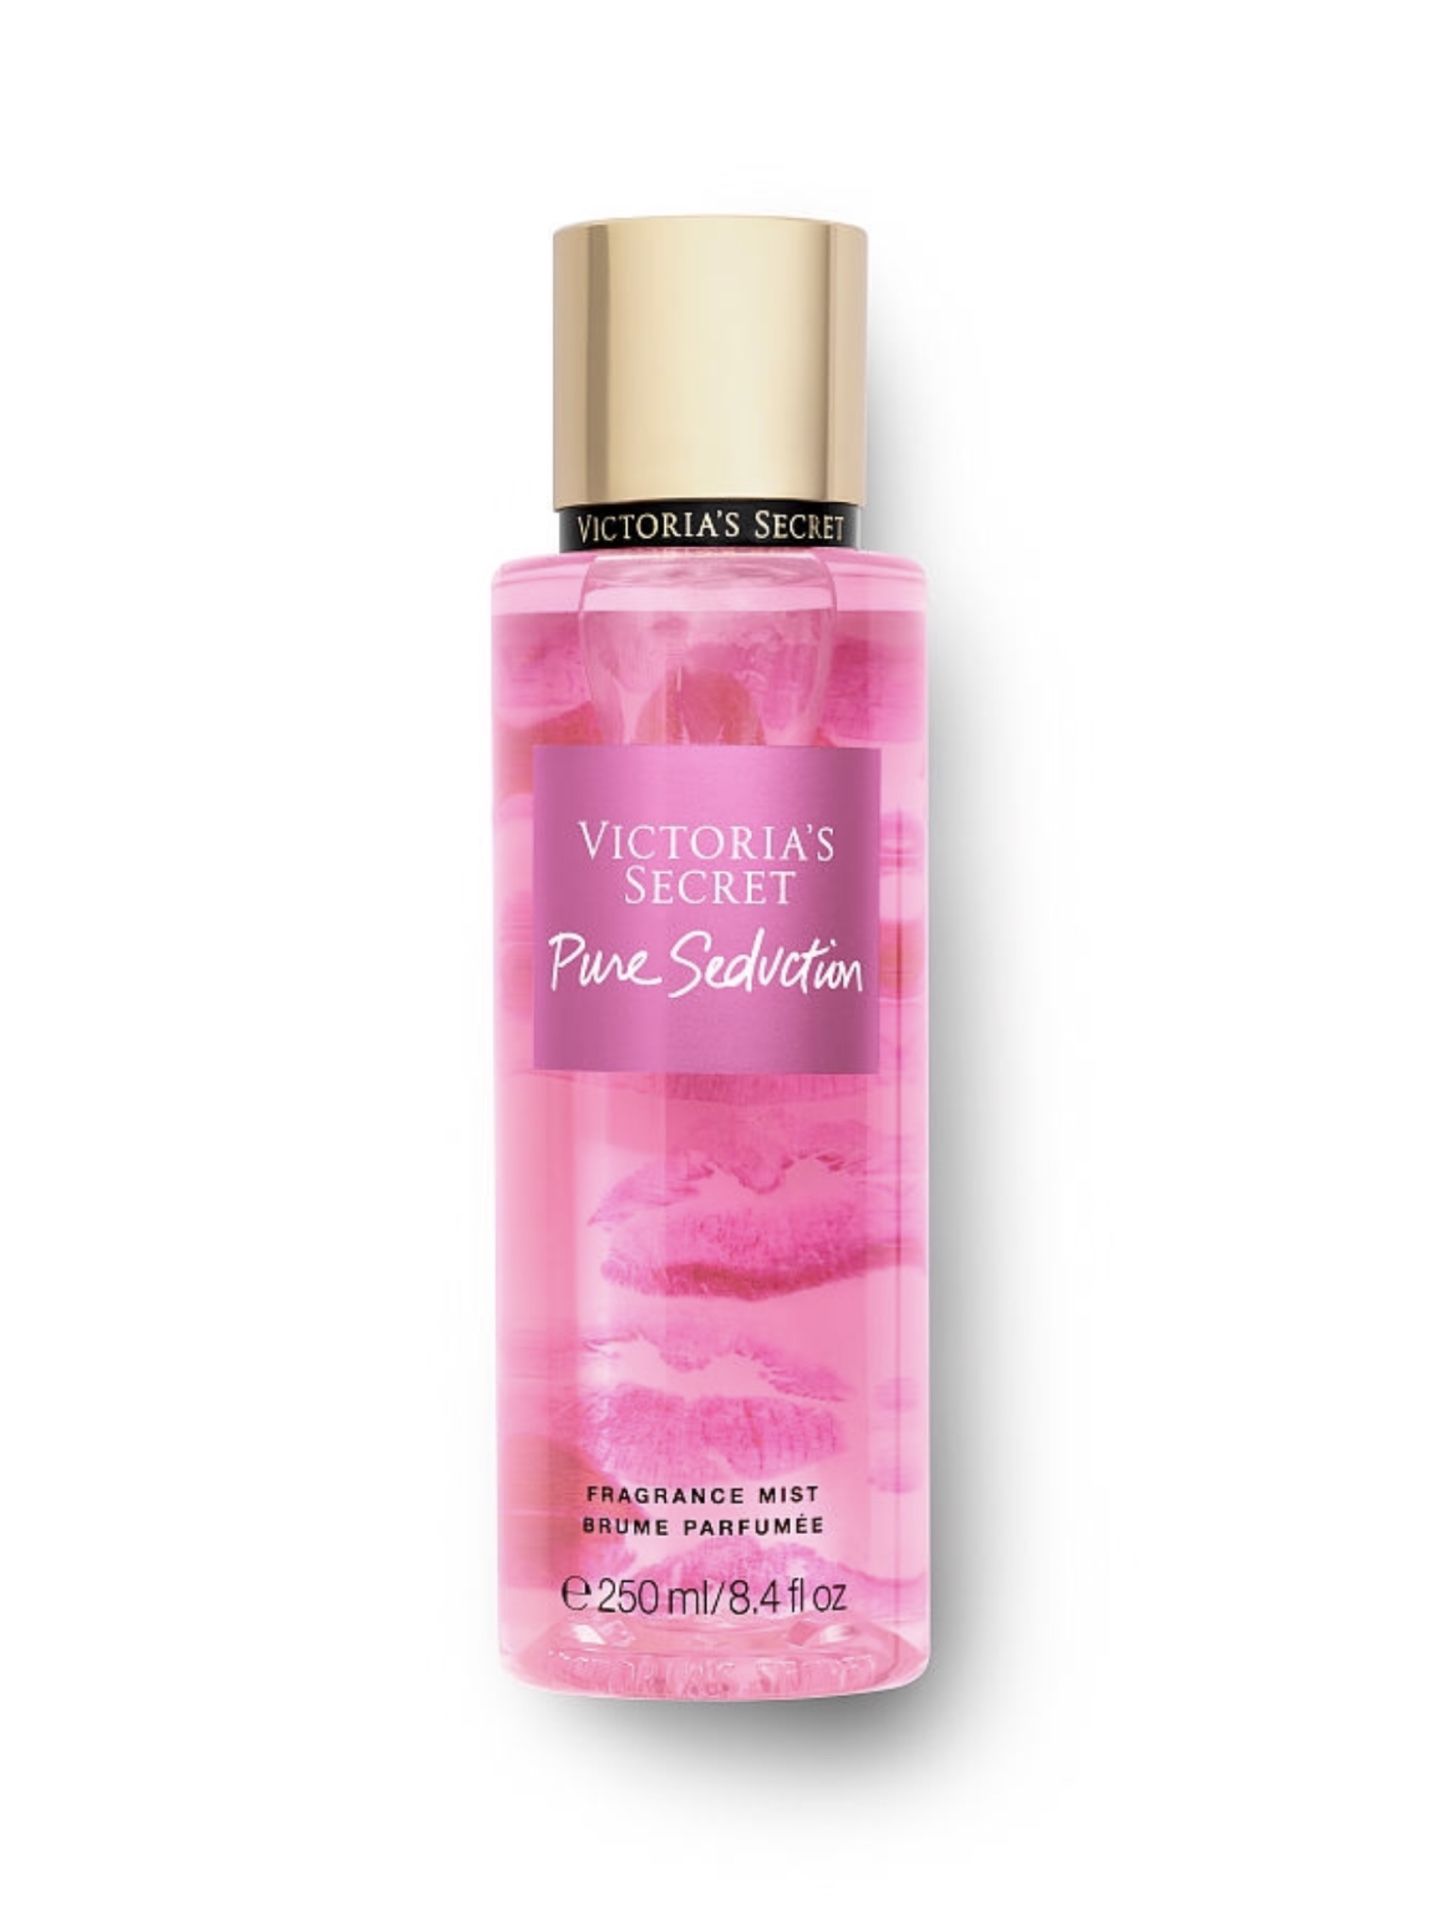 Victoria’s Secret PURE SEDUCTION Fragrance Mist Body Spray 8.4 fl oz Full Size